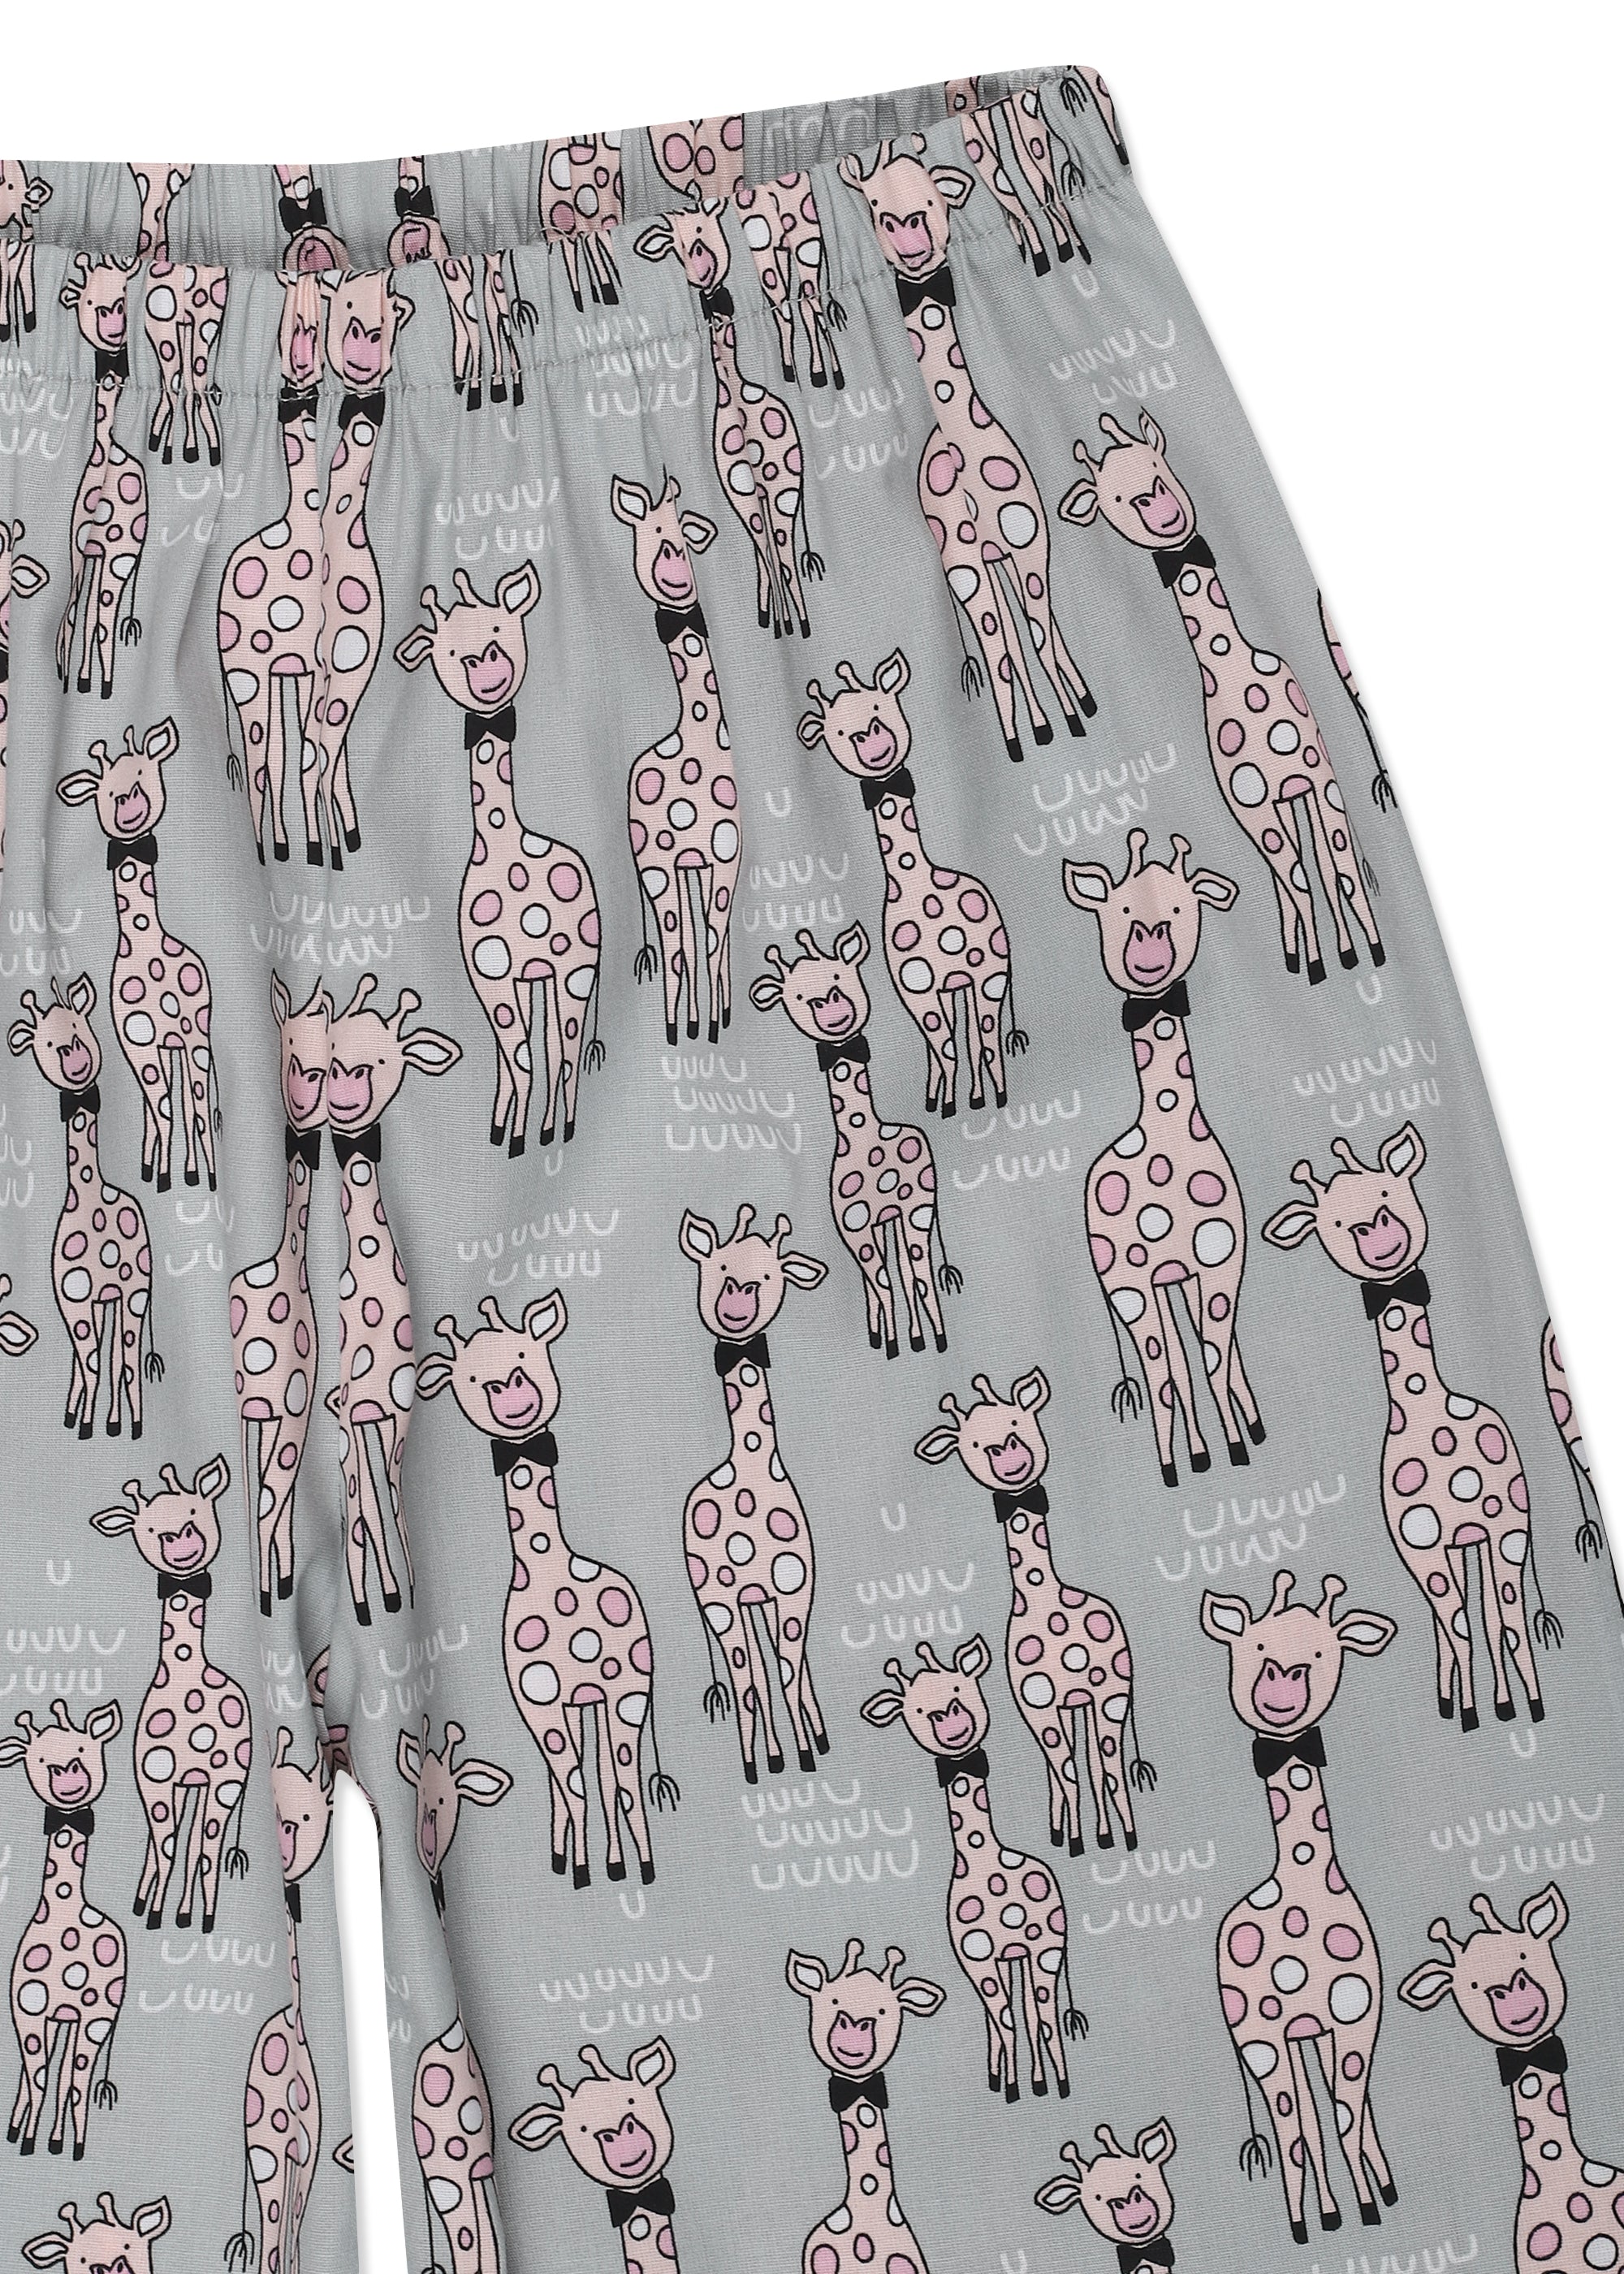 Giraffe Print Long Sleeve Kids Night Suit - Shopbloom